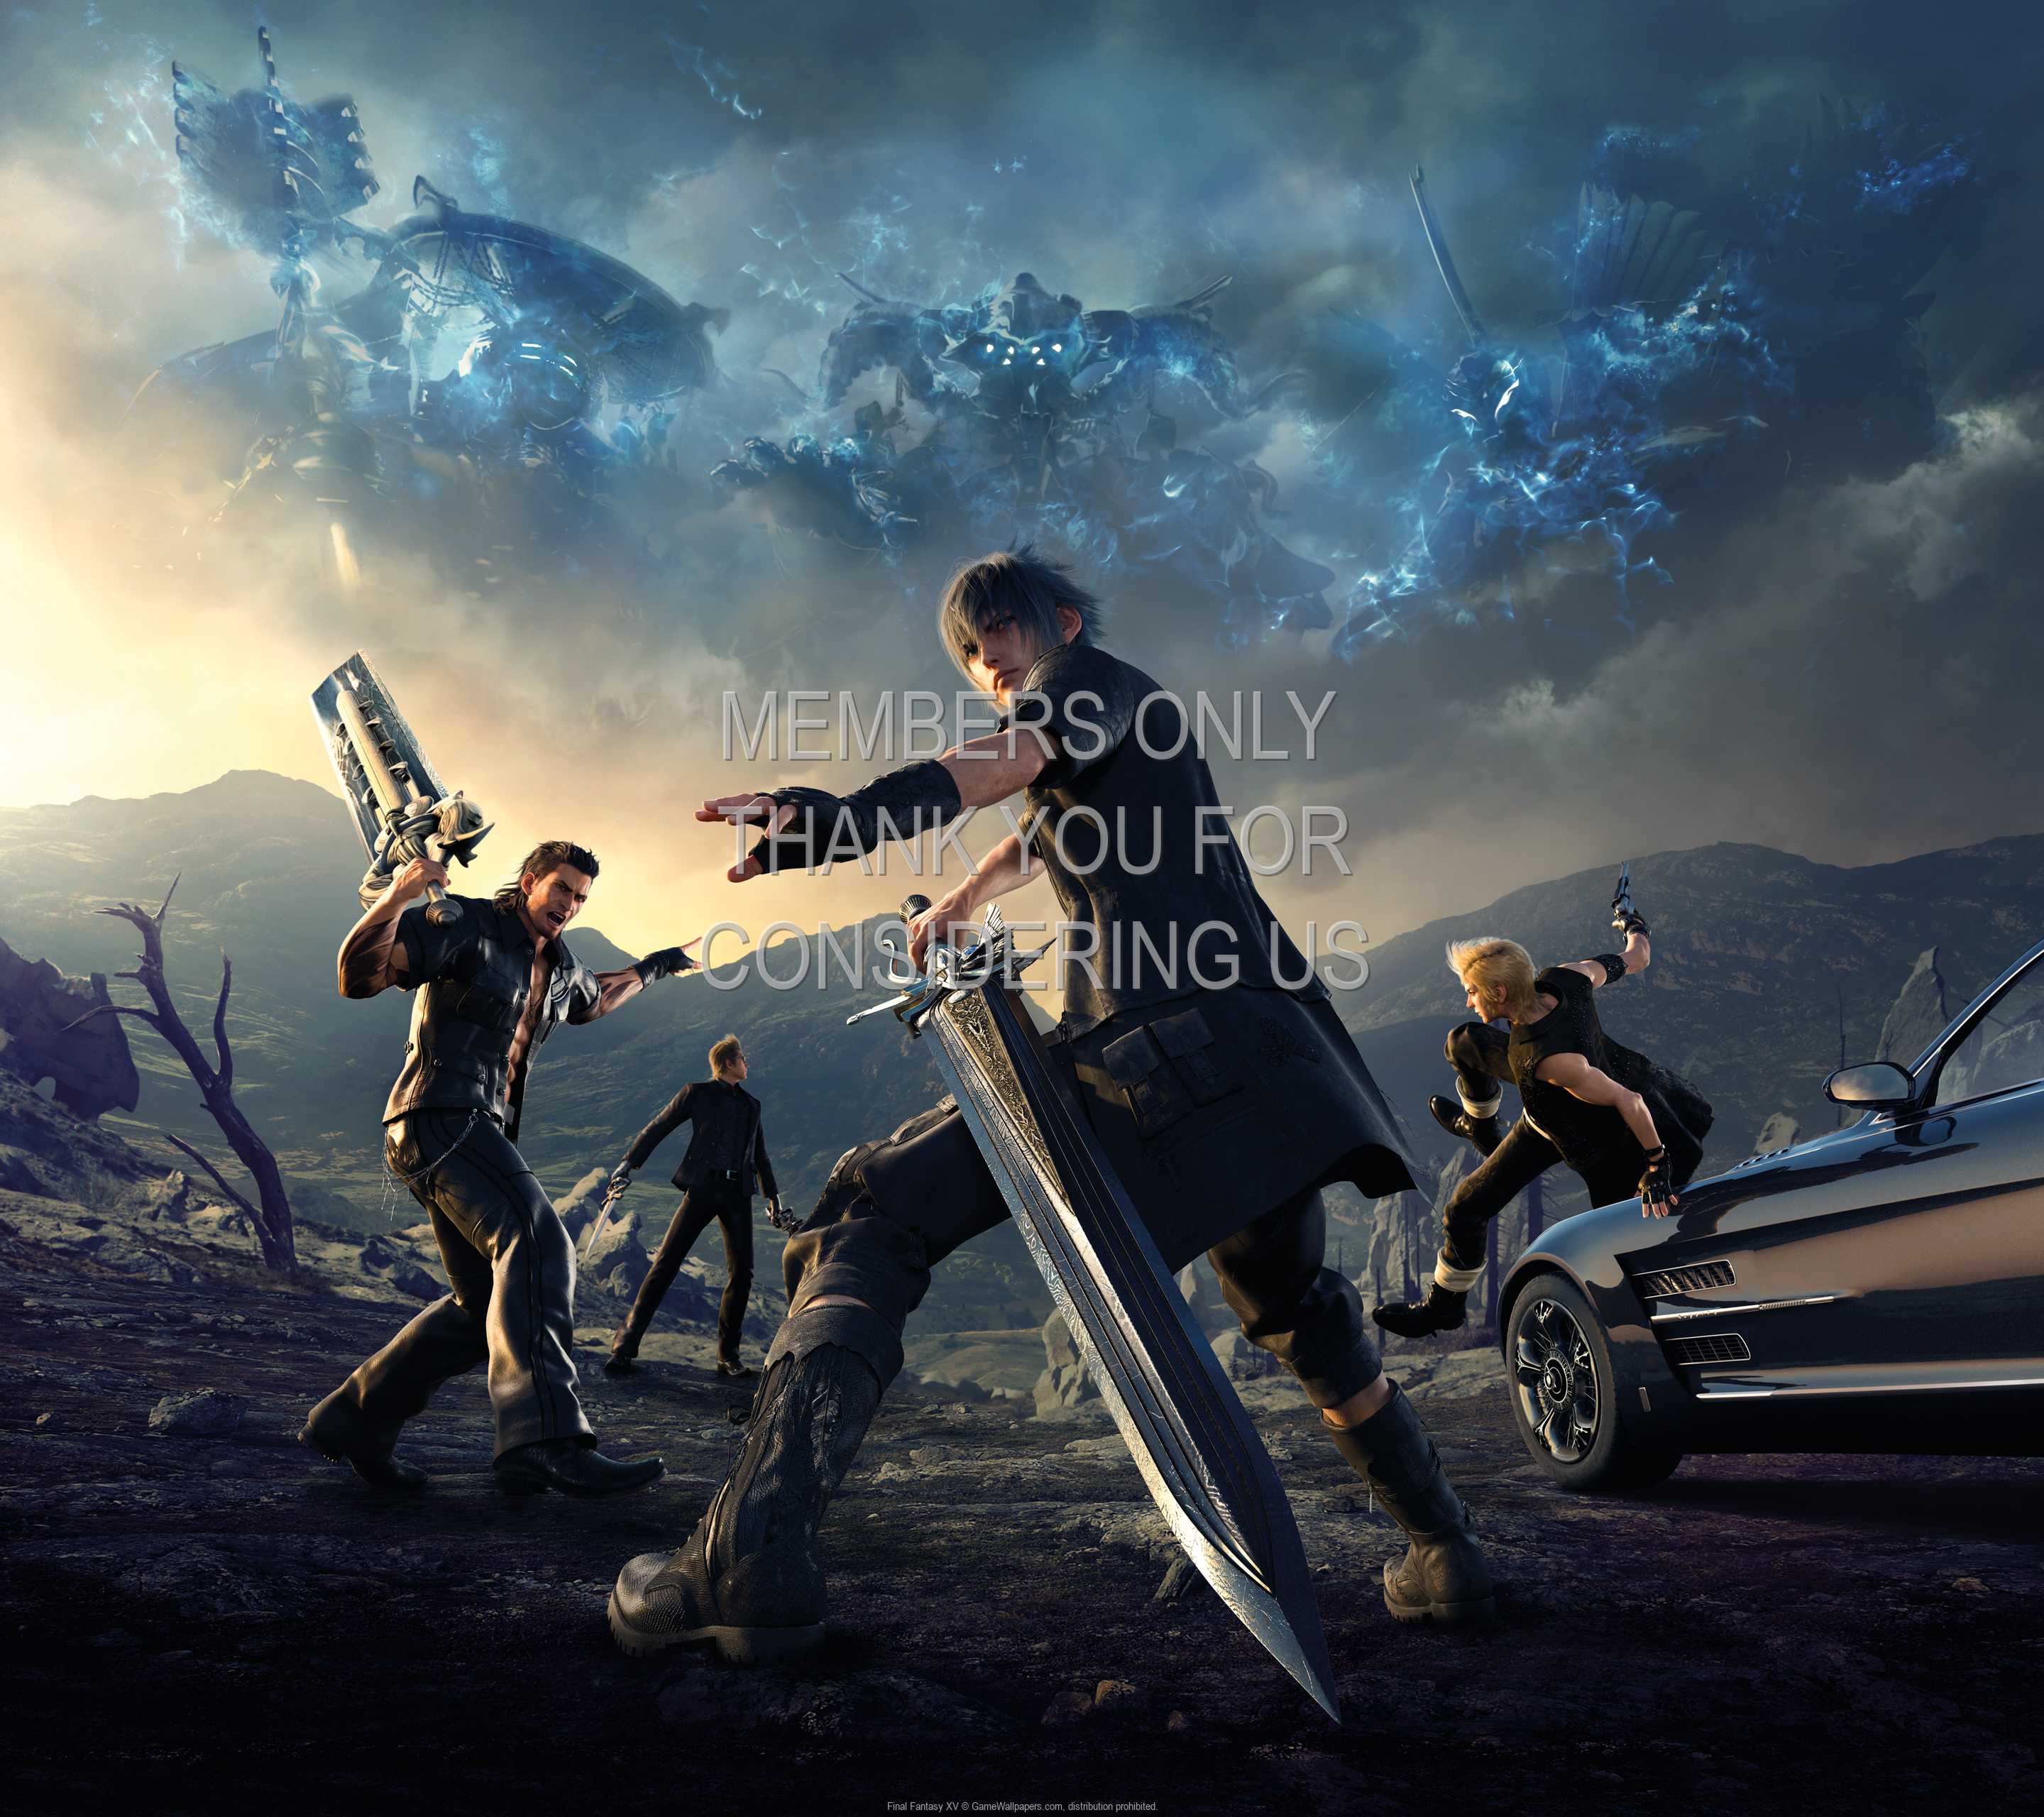 Final Fantasy XV 1440p Horizontal Mobile wallpaper or background 03